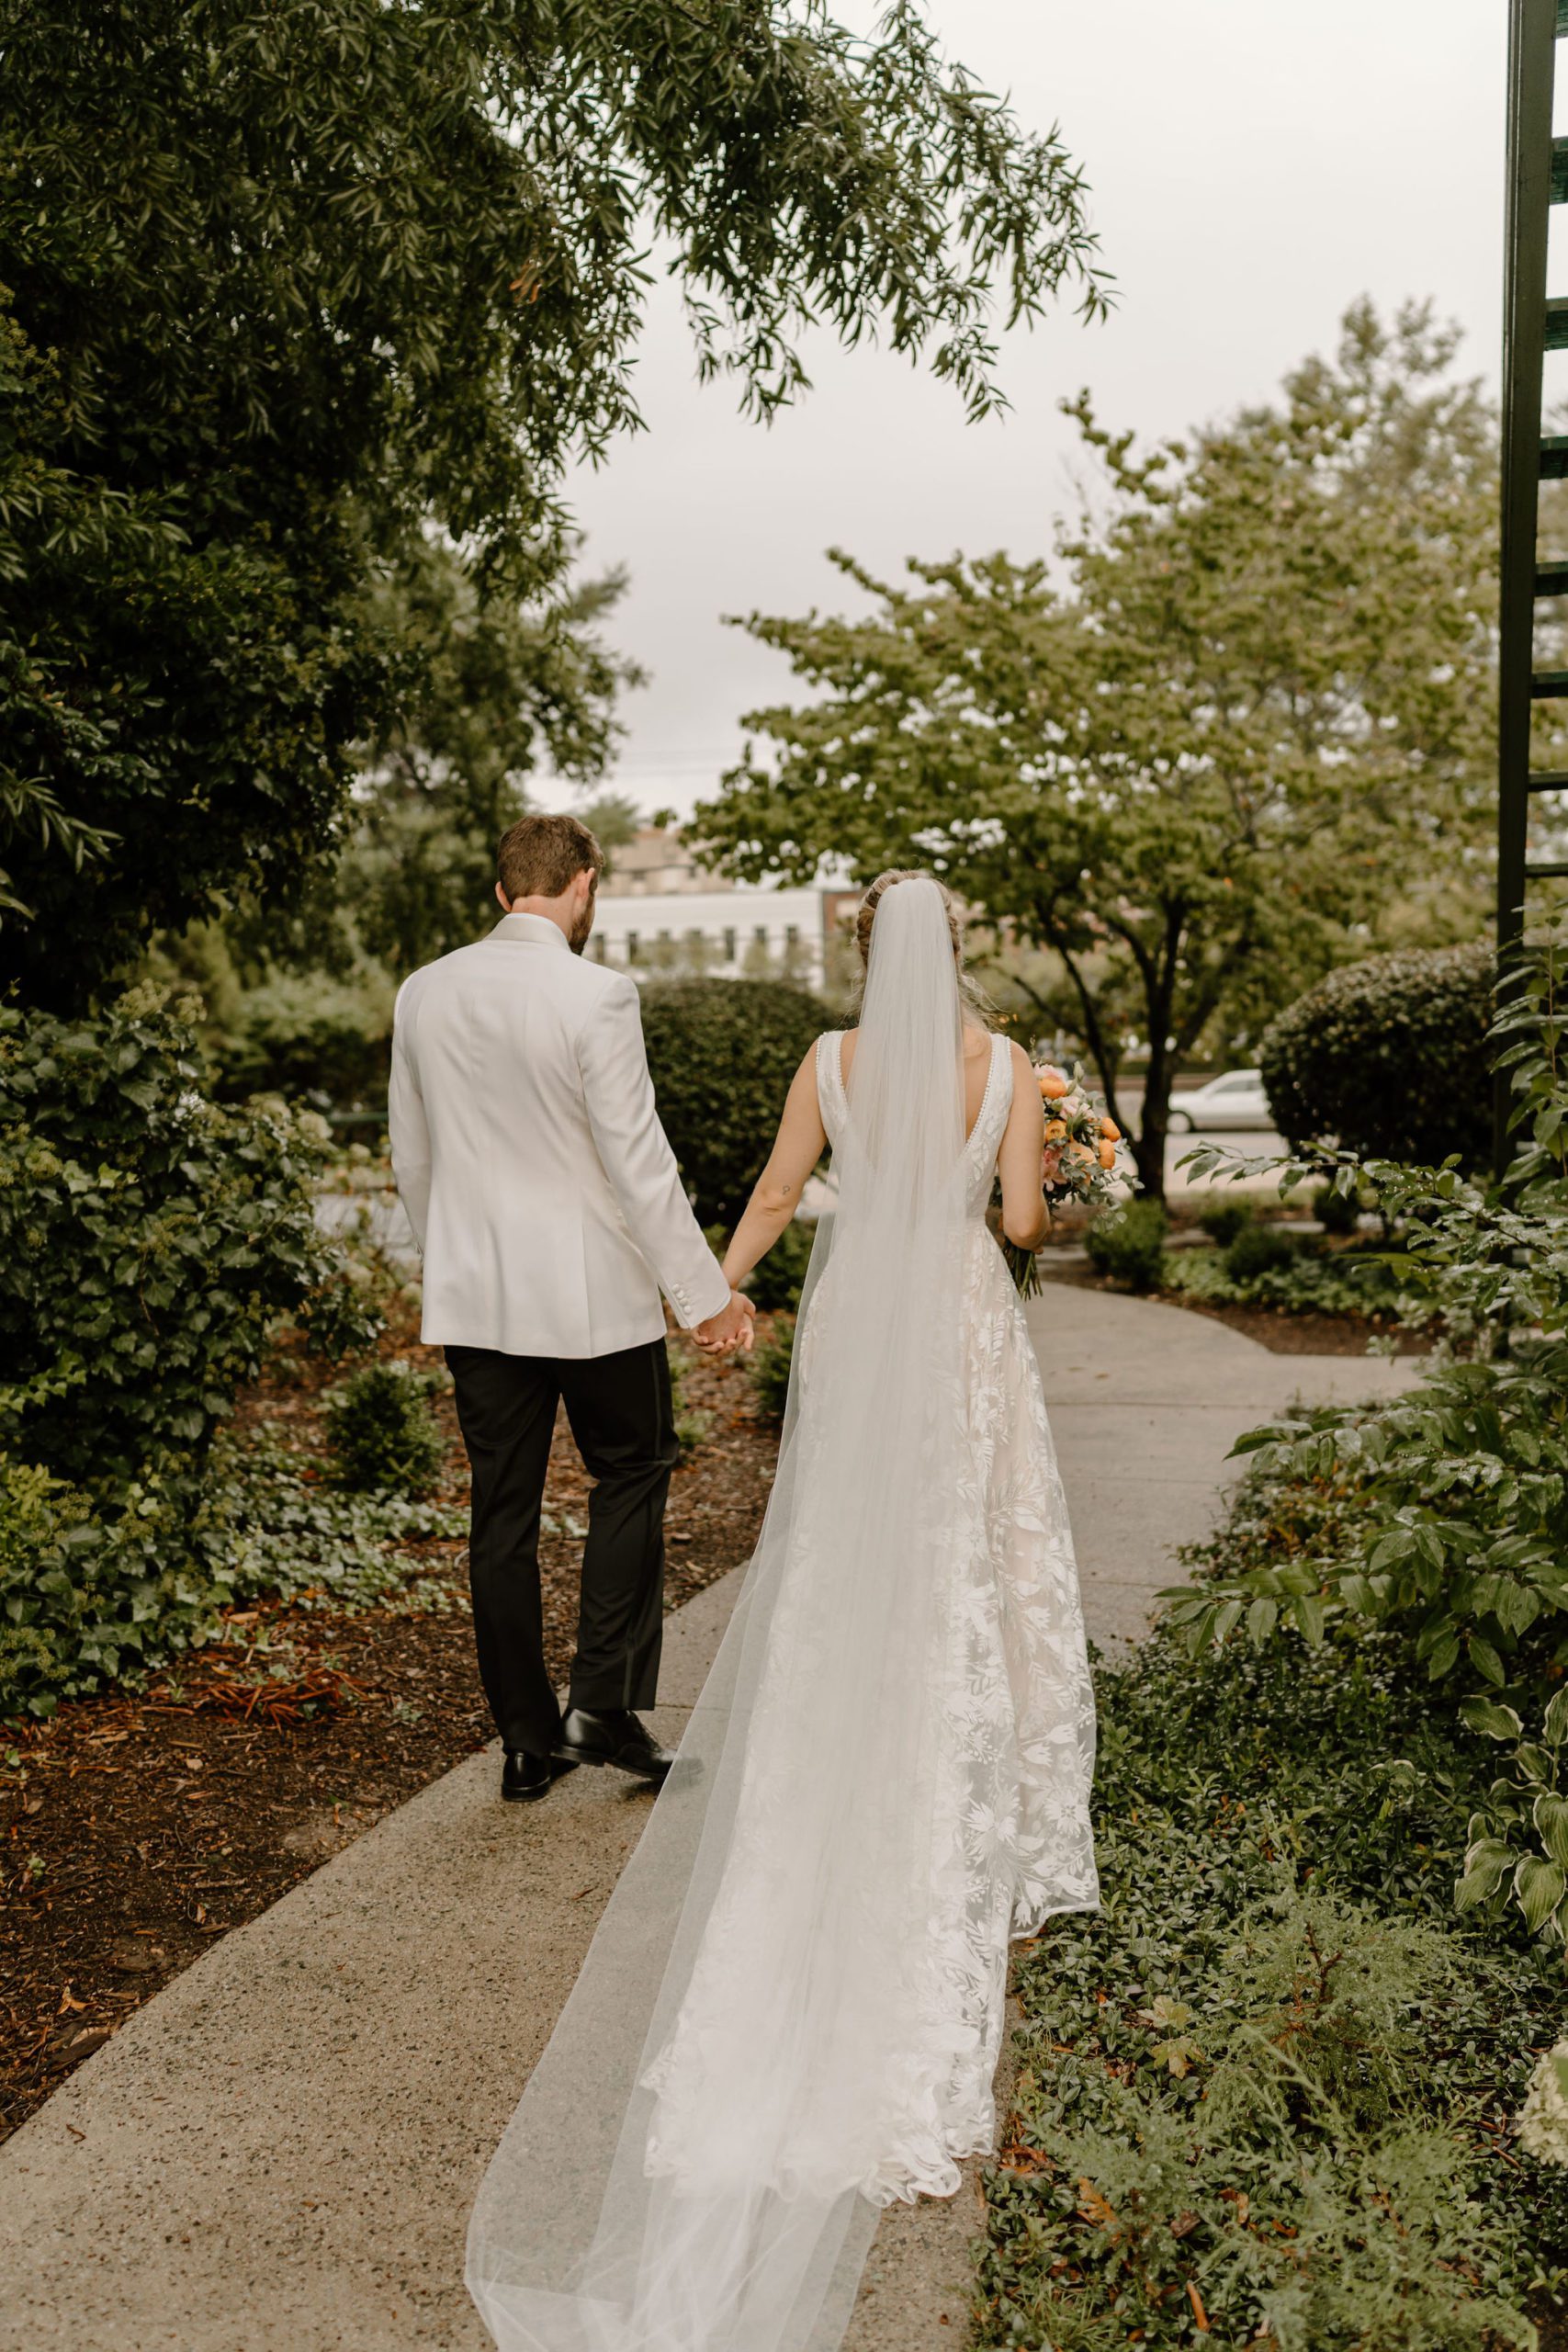 Rainy Wedding Day In North Carolina With Elegant Wedding Decor